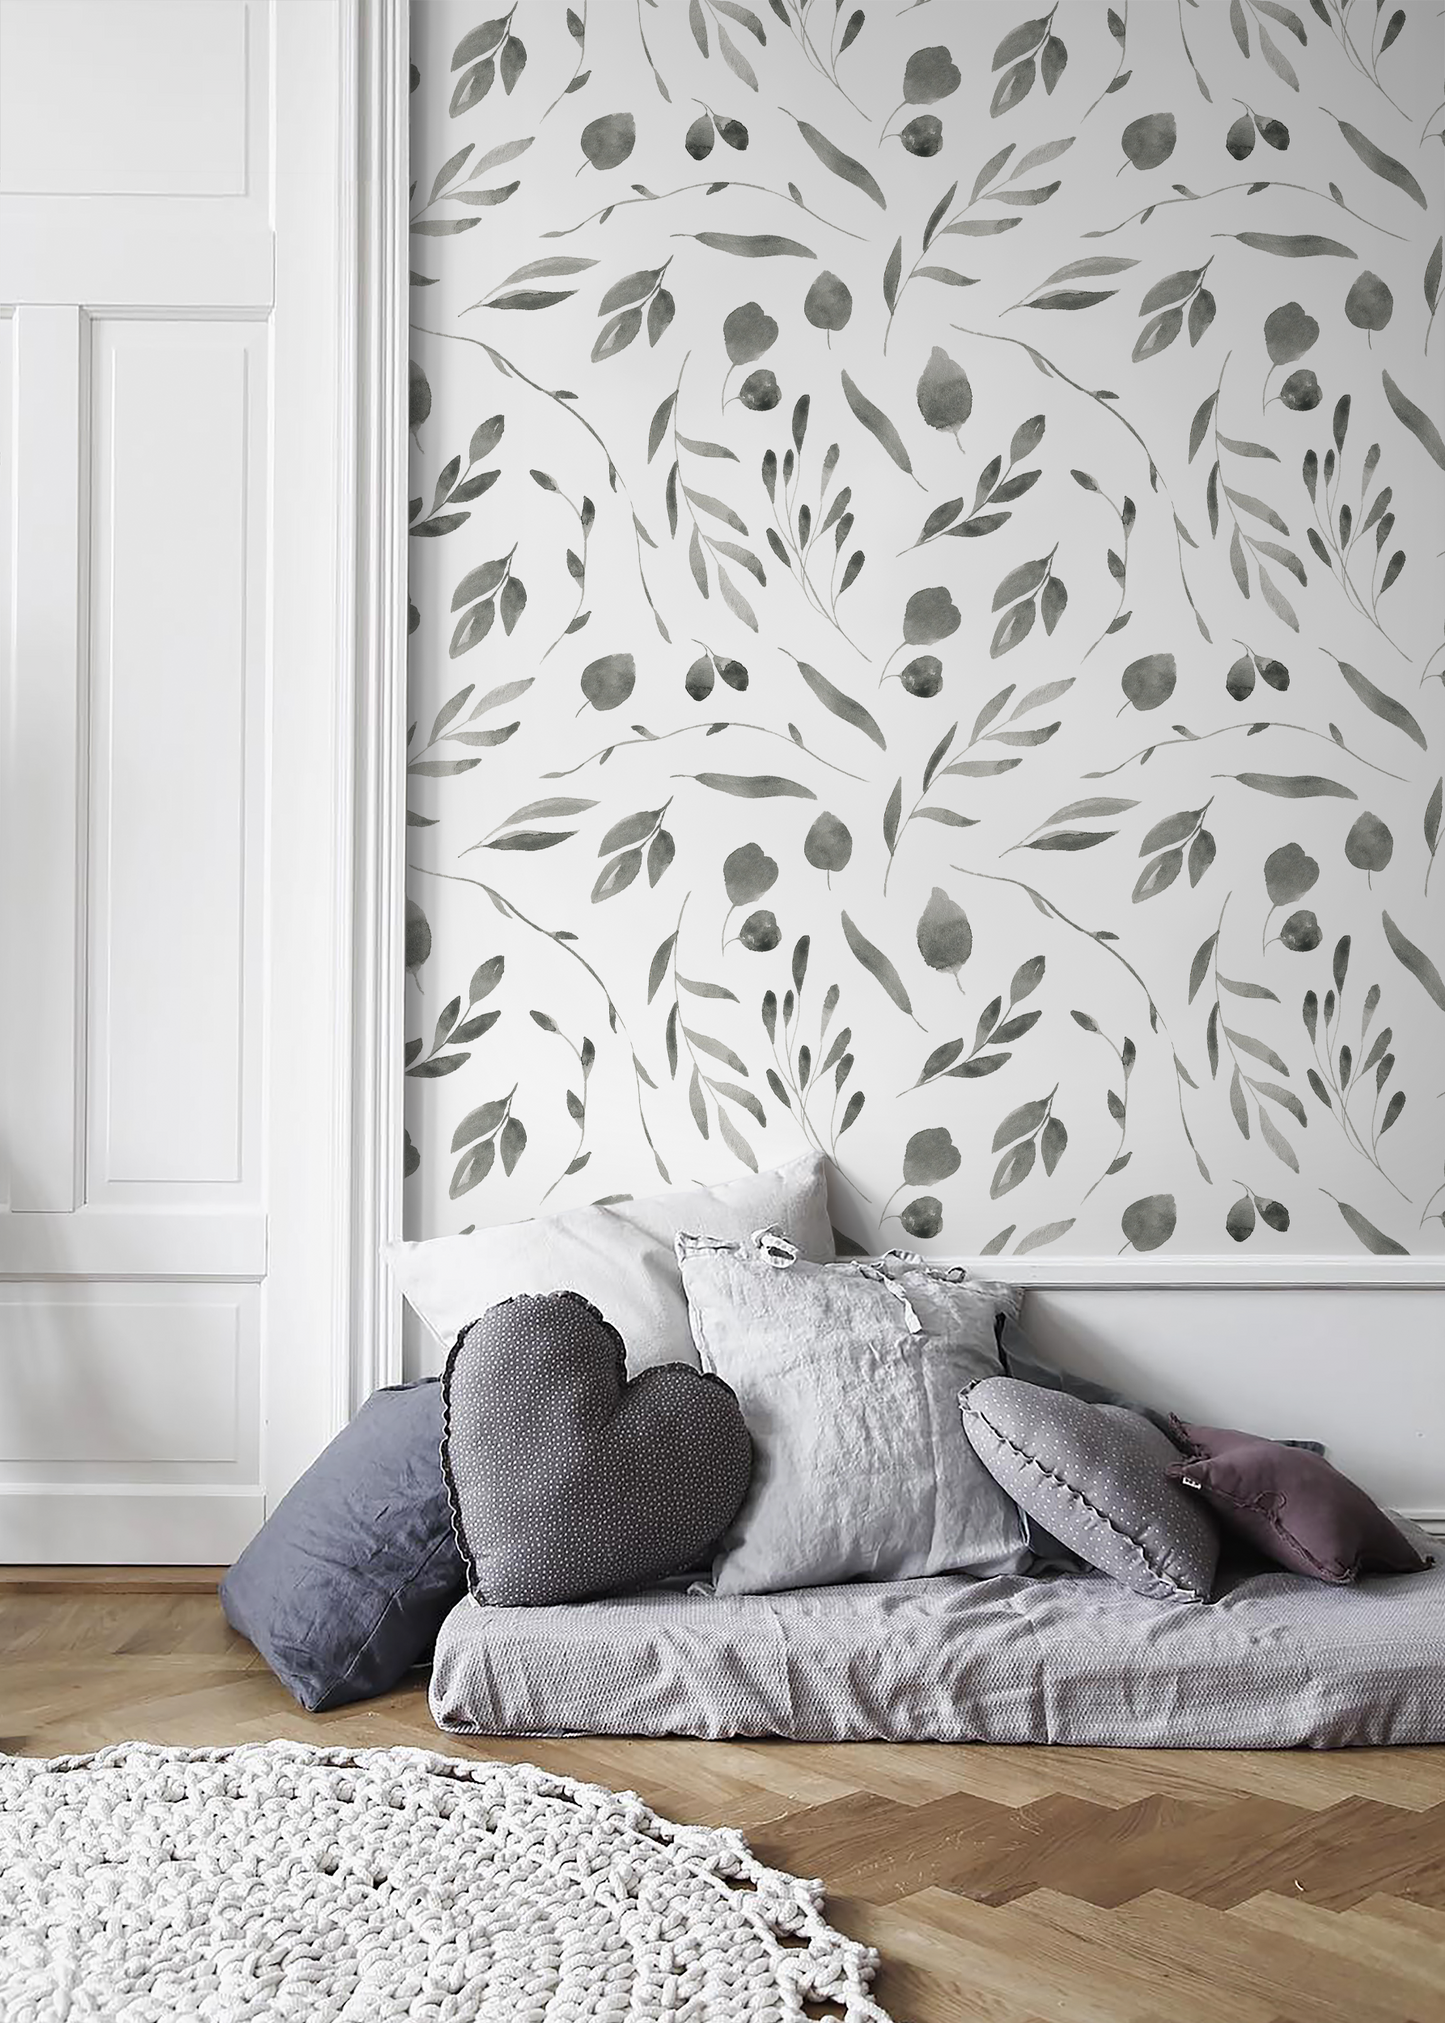 Removable Wallpaper, Scandinavian Wallpaper, Temporary Wallpaper, Minimalistic Wallpaper, Peel and Stick Wallpaper, Wall Paper, Boho - B028